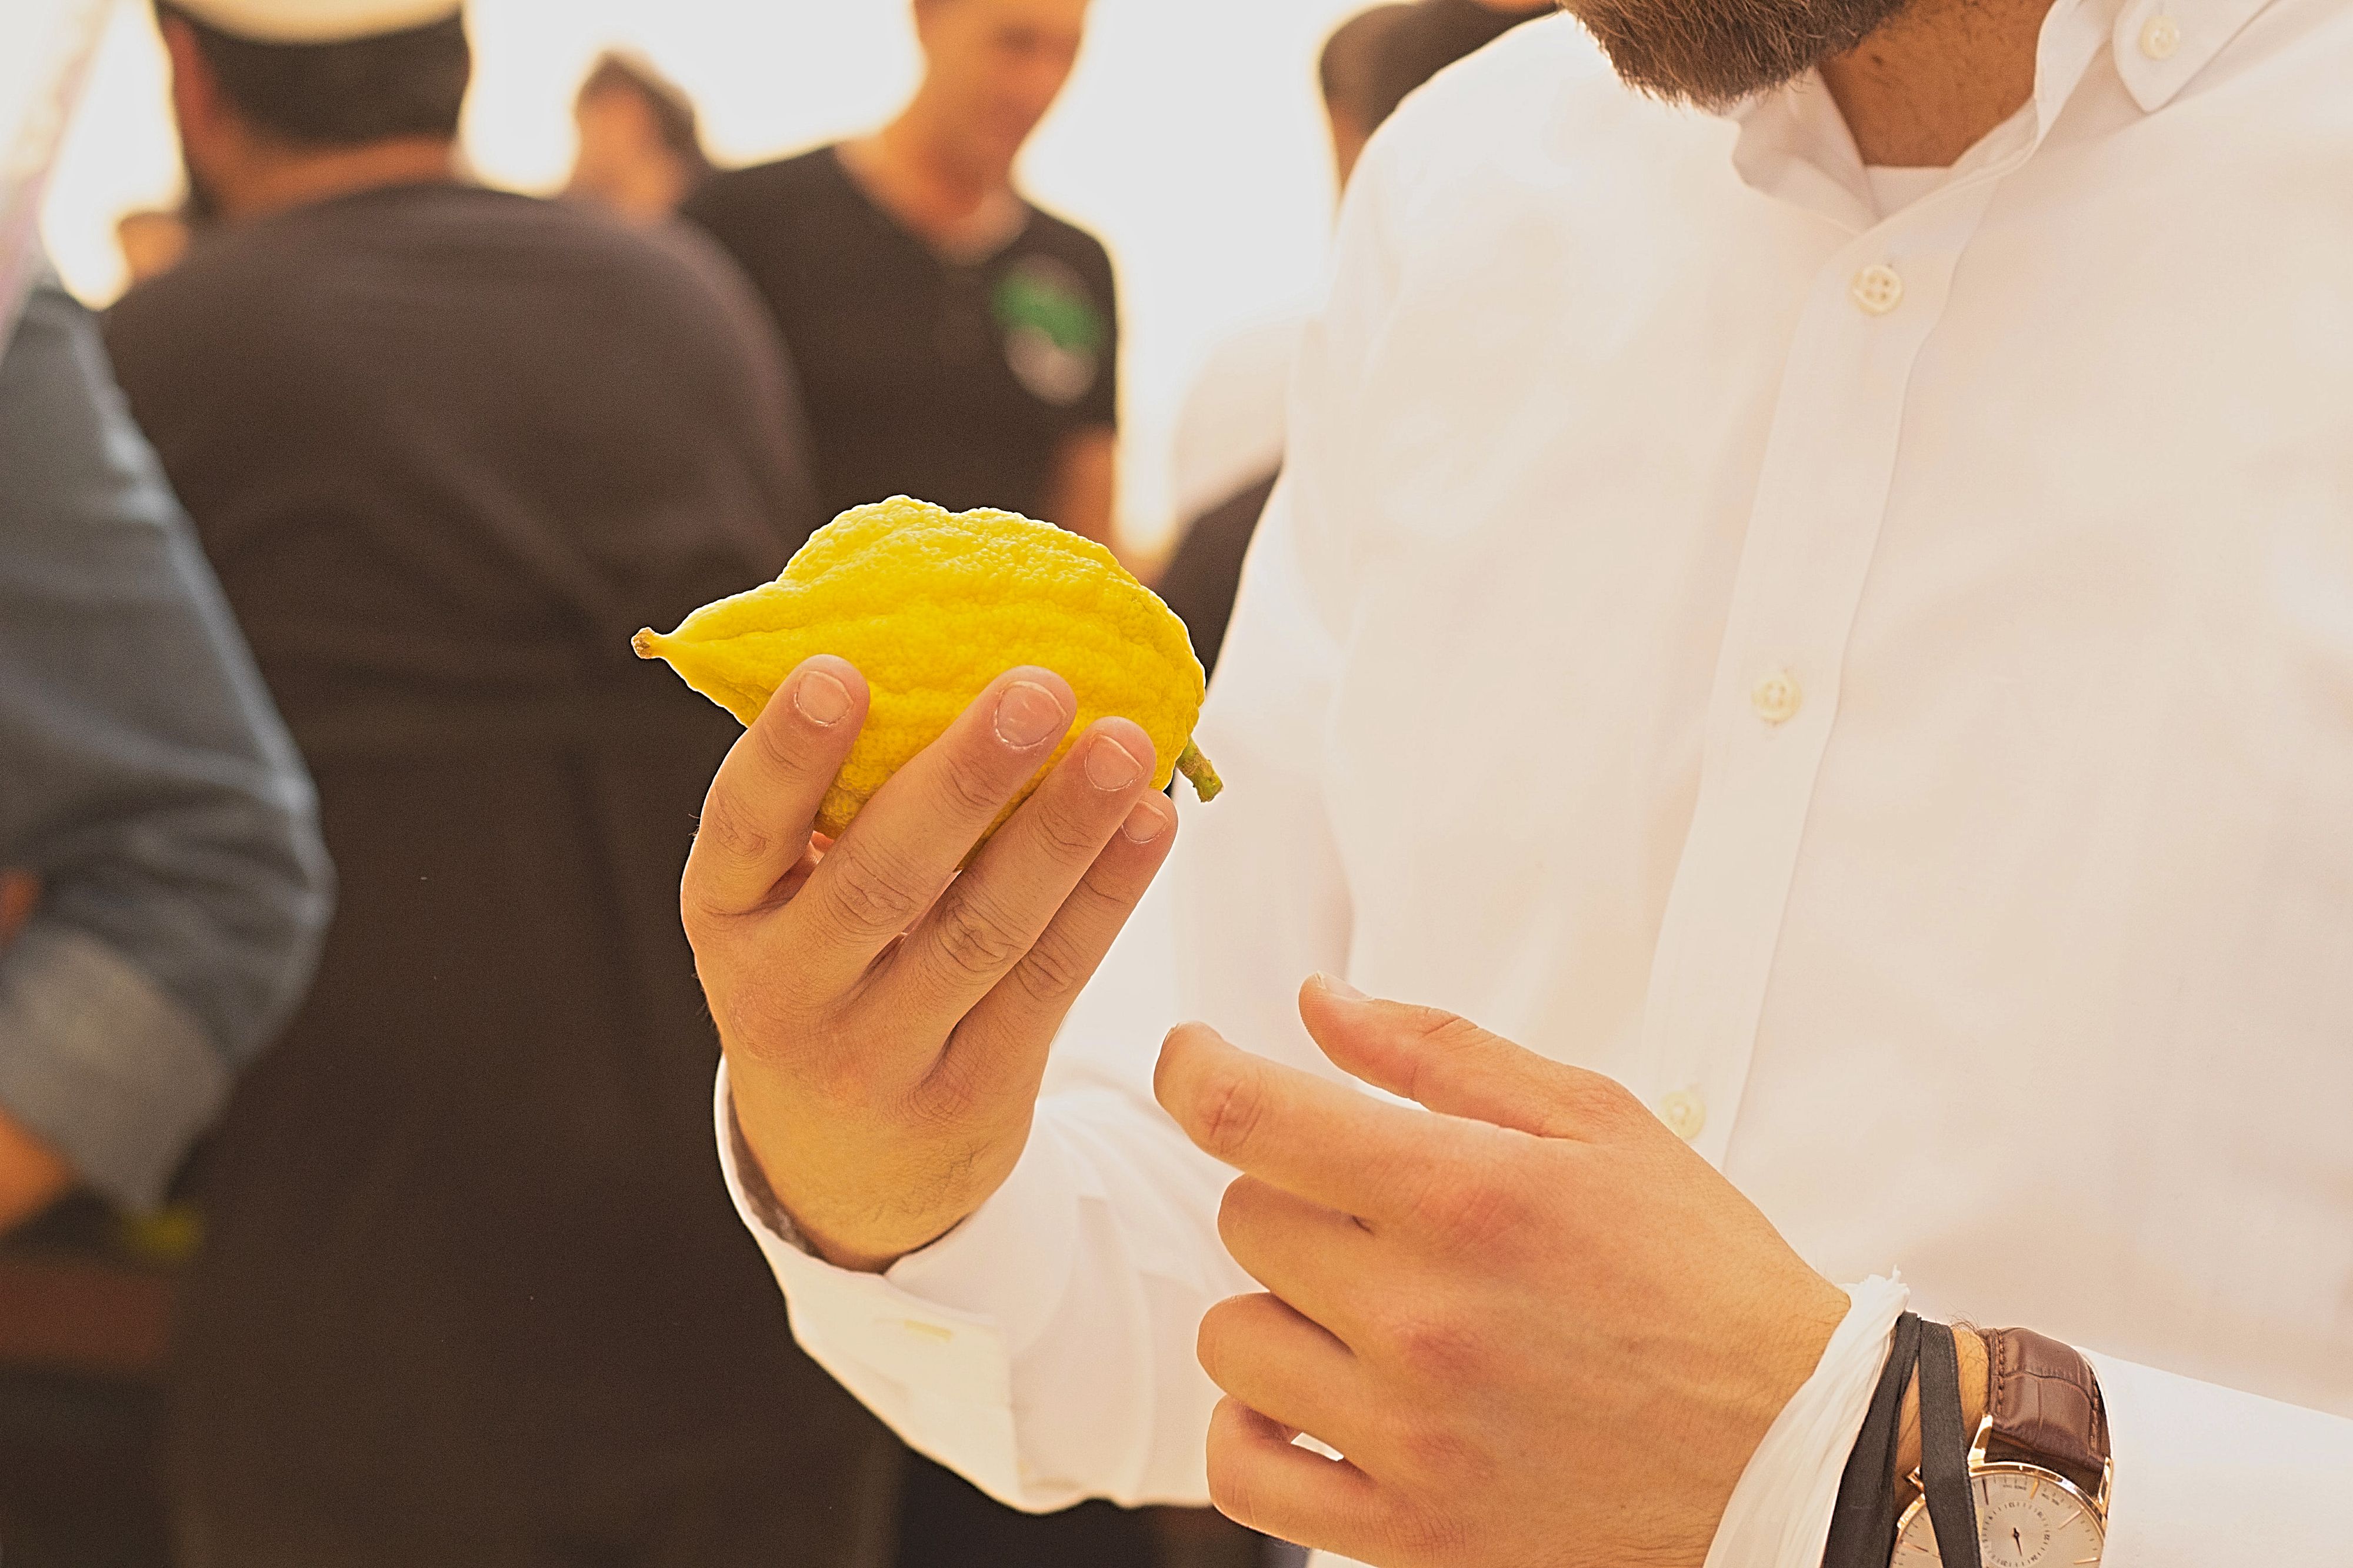 A Jewish man choosing etrog (citron) for the holiday of Sukkot